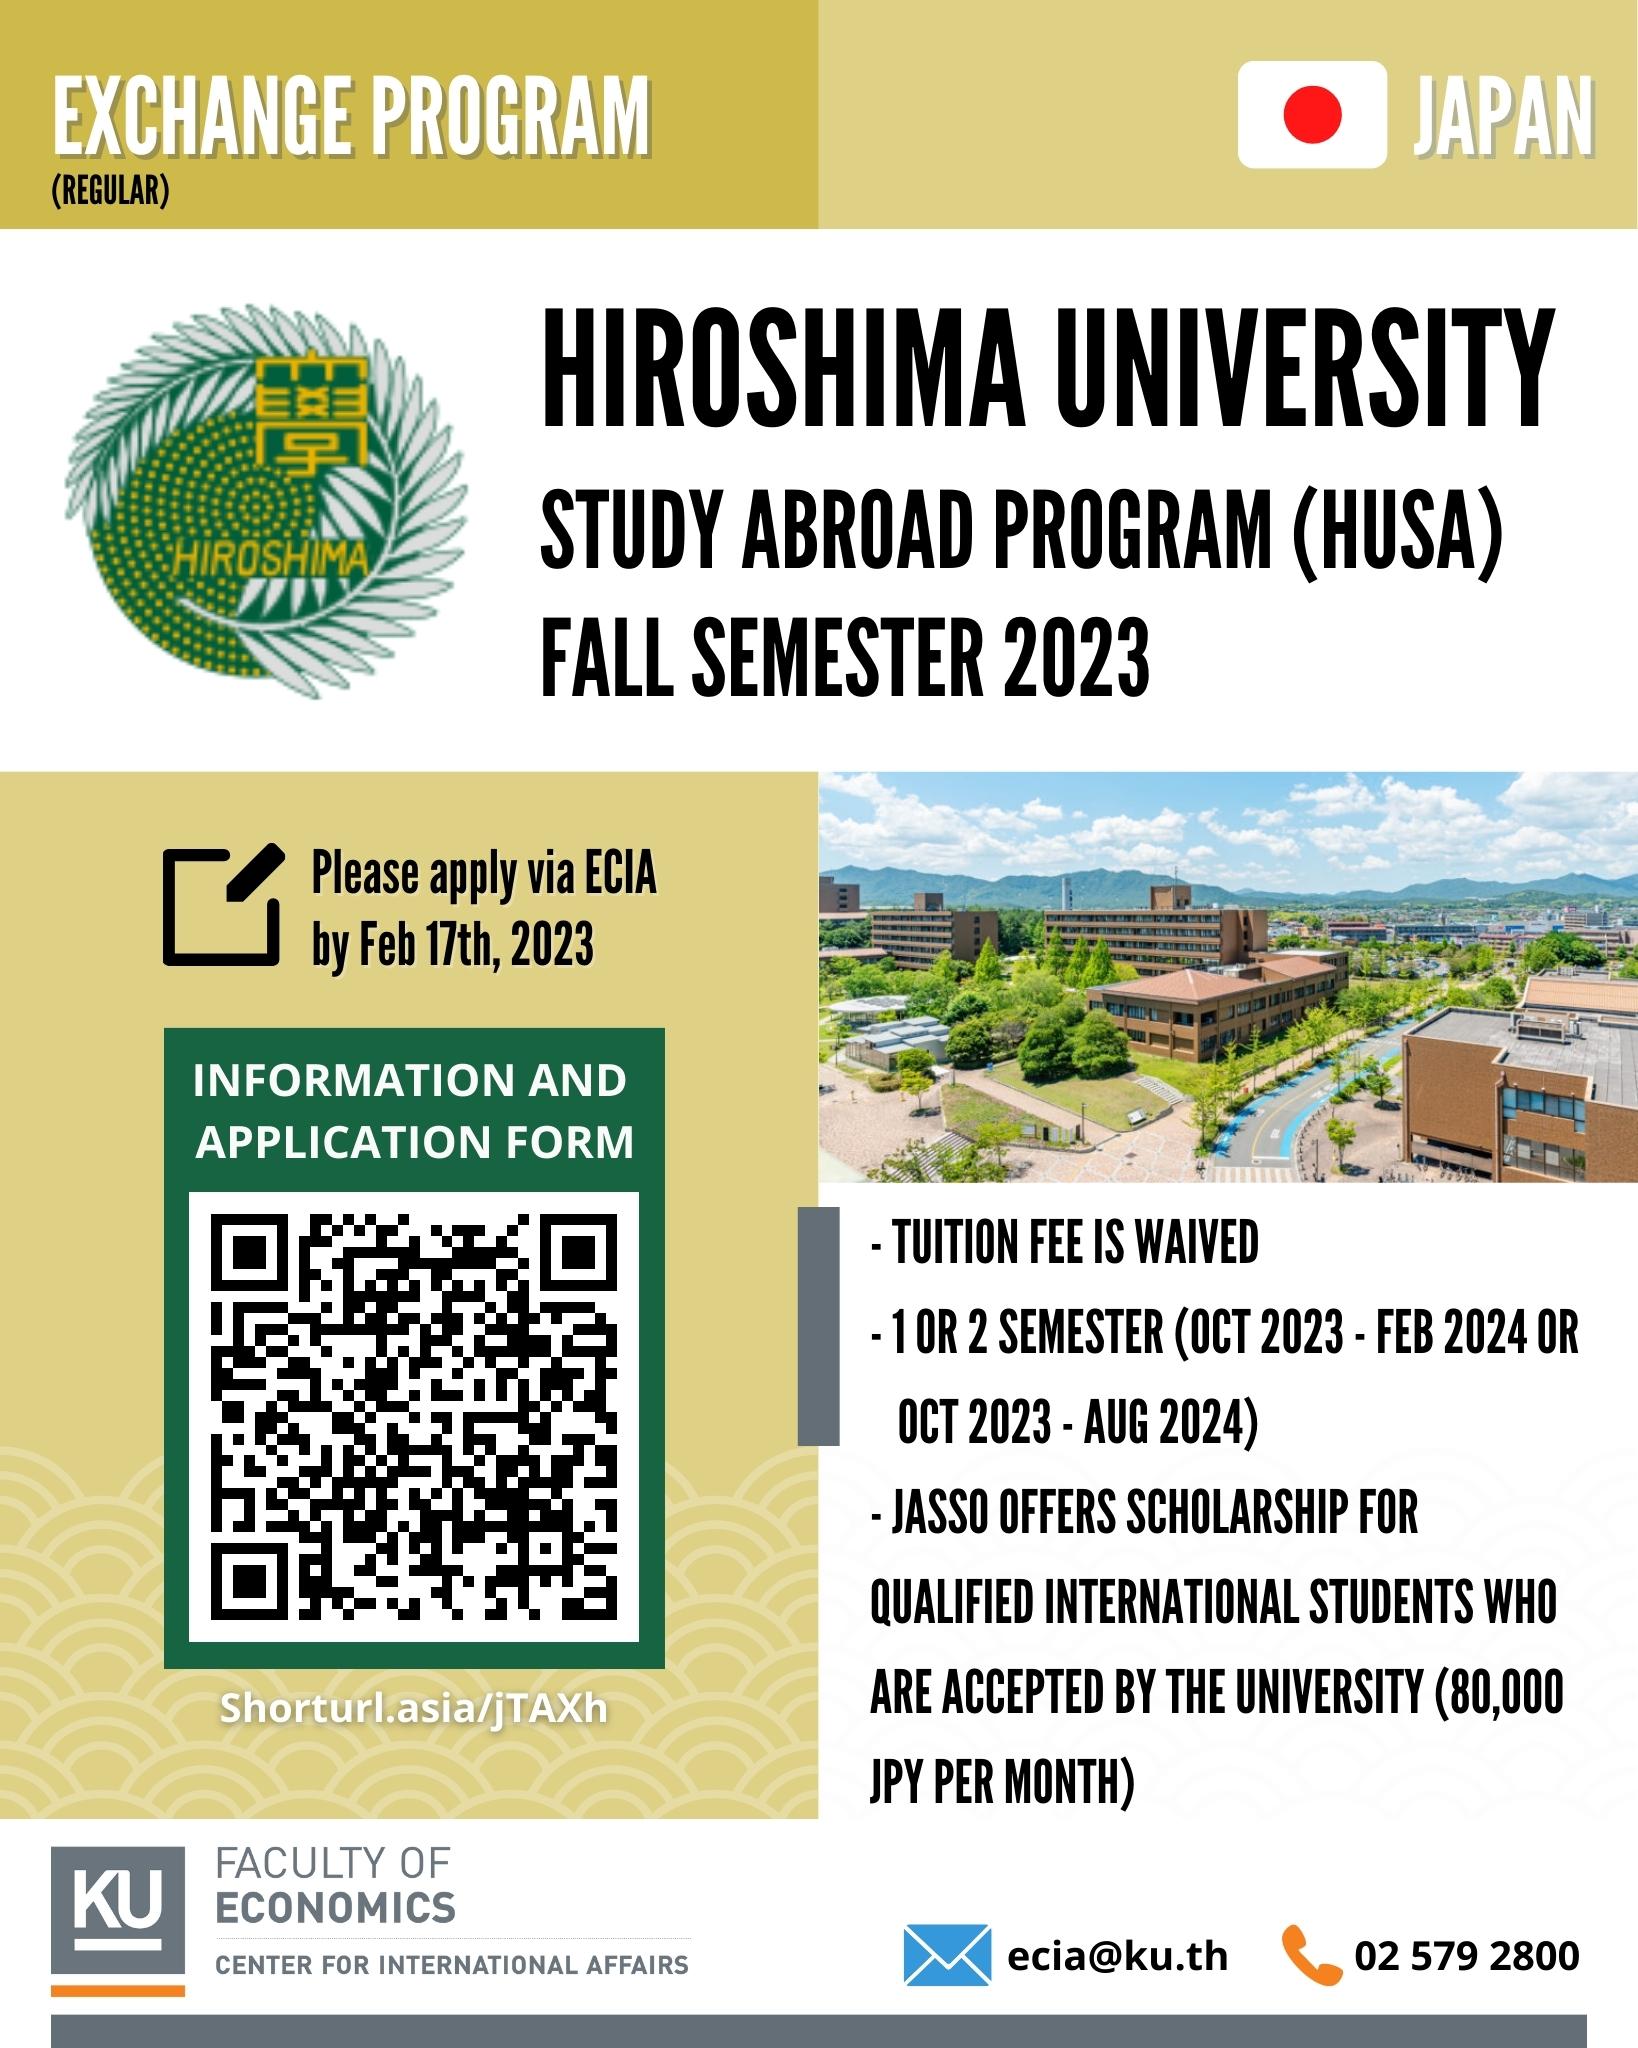 [Exchange Program] Hiroshima University Study Abroad Program (HUSA), Fall Semester 2023